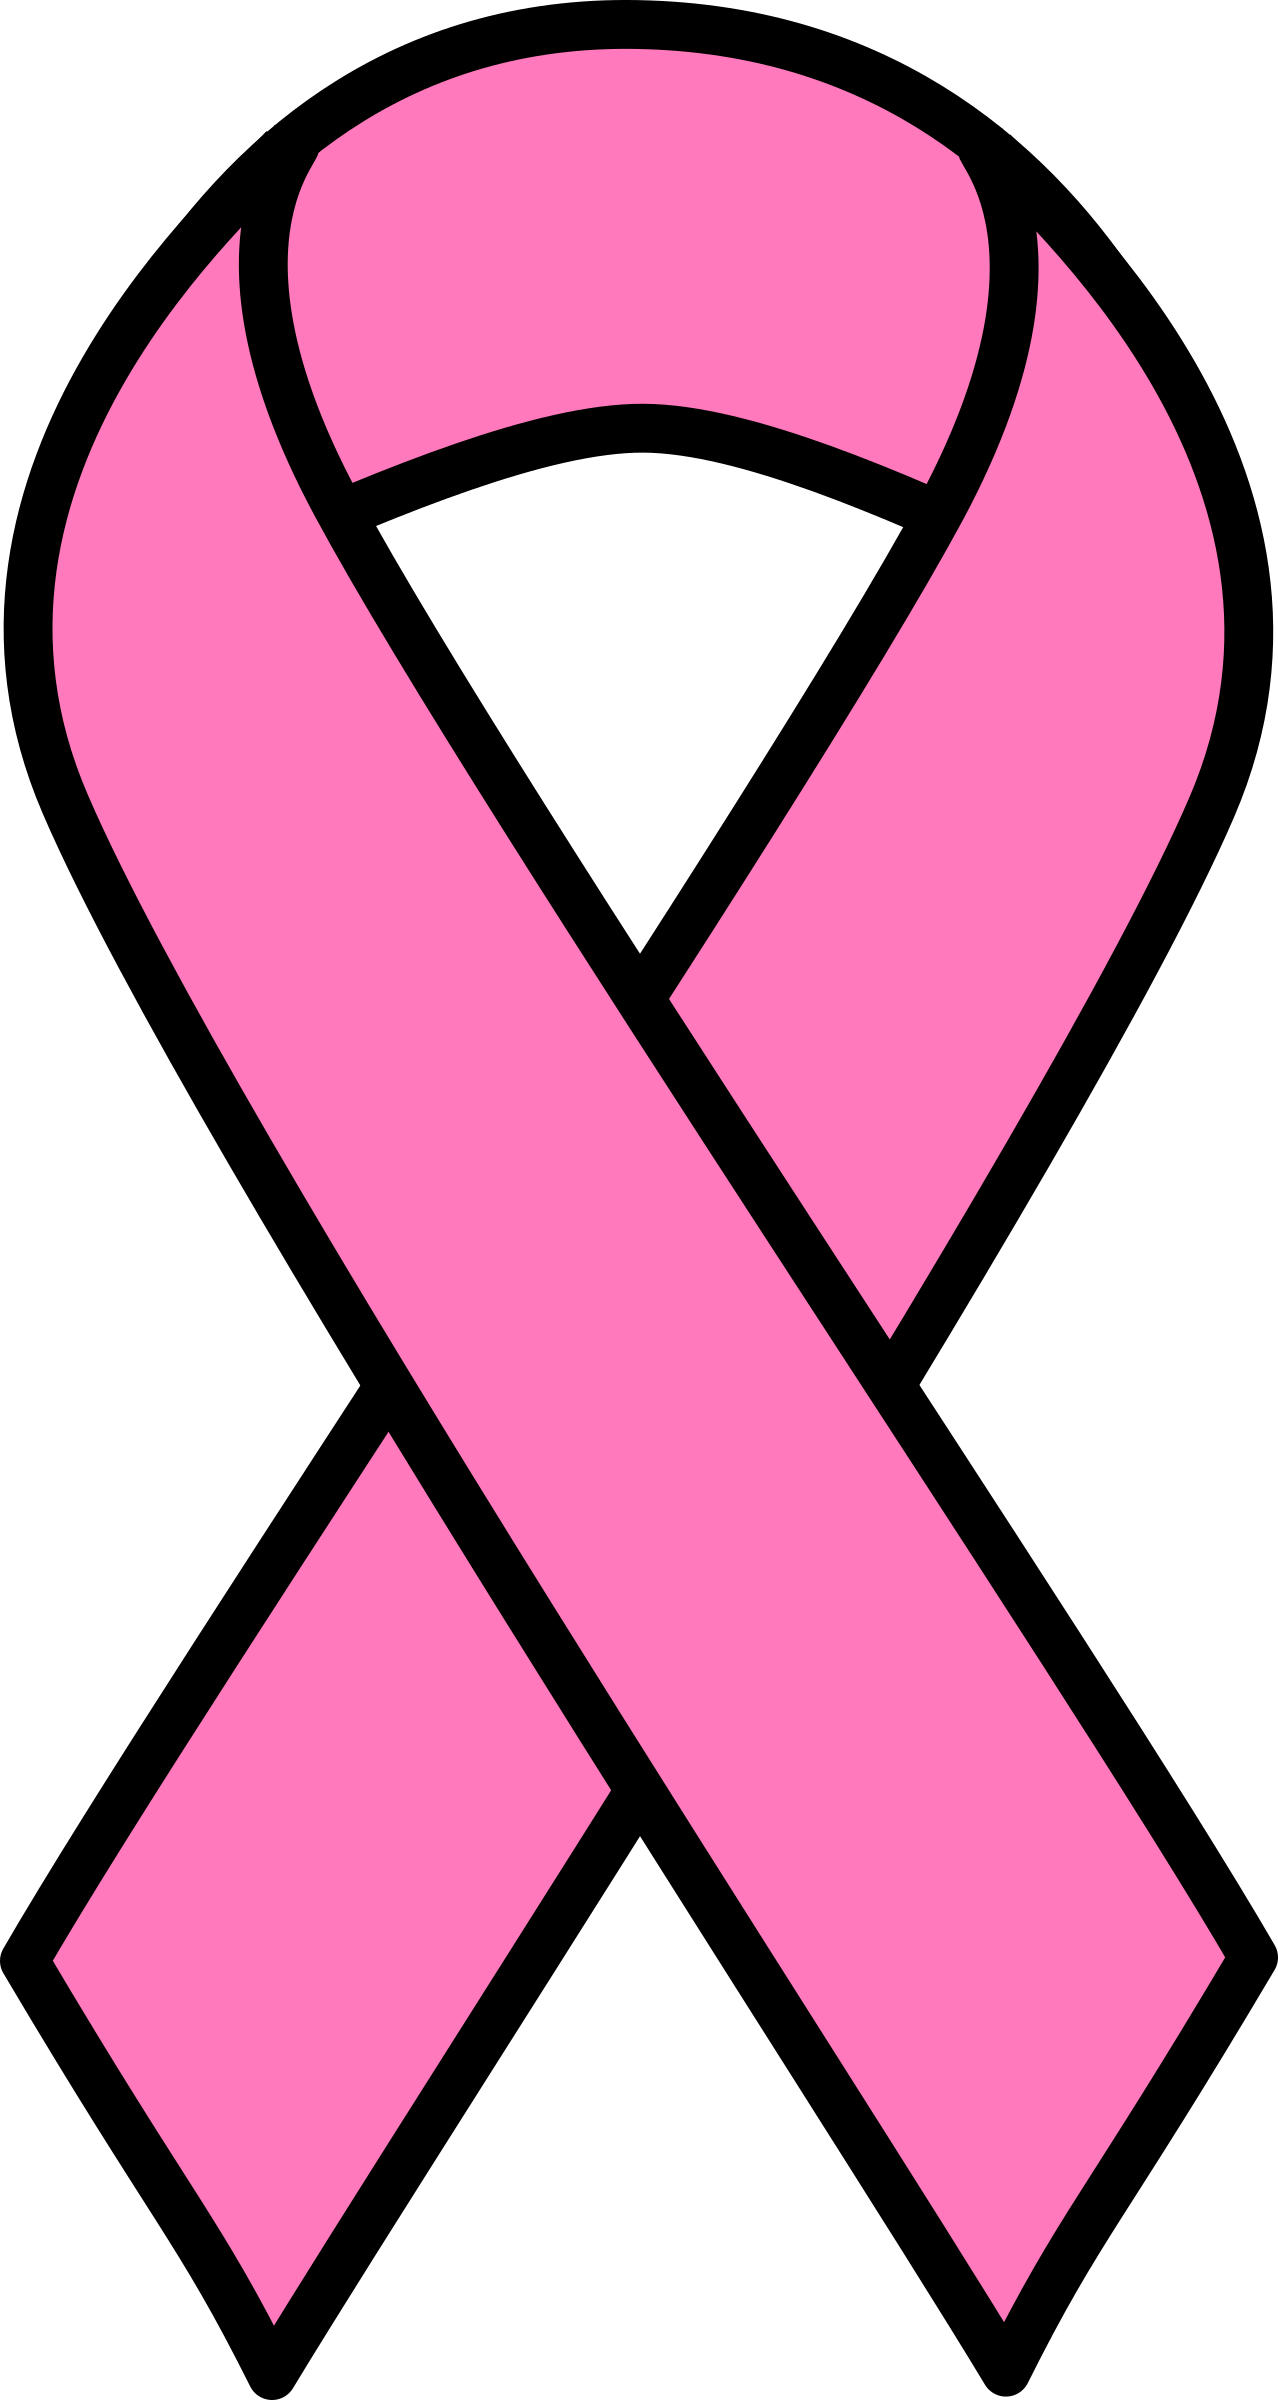 Download PNG image - Cancer Logo PNG Pic 